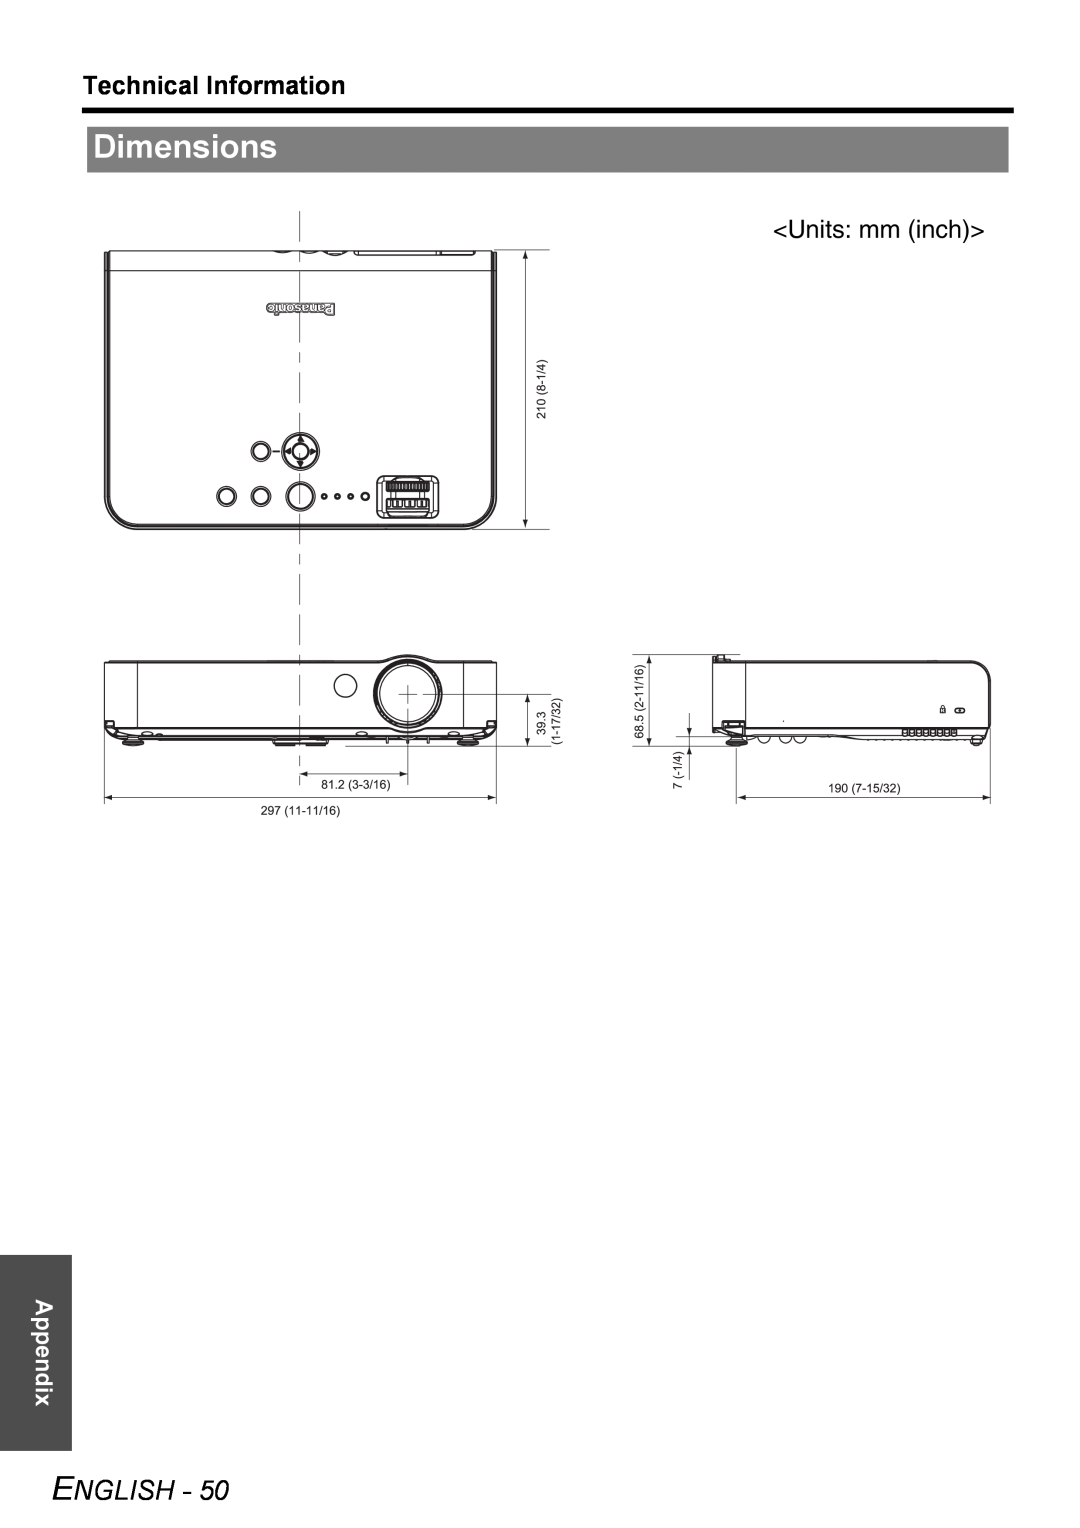 Philips PT-LB51SU manual Dimensions, English, Technical Information, Units mm inch, Appendix 